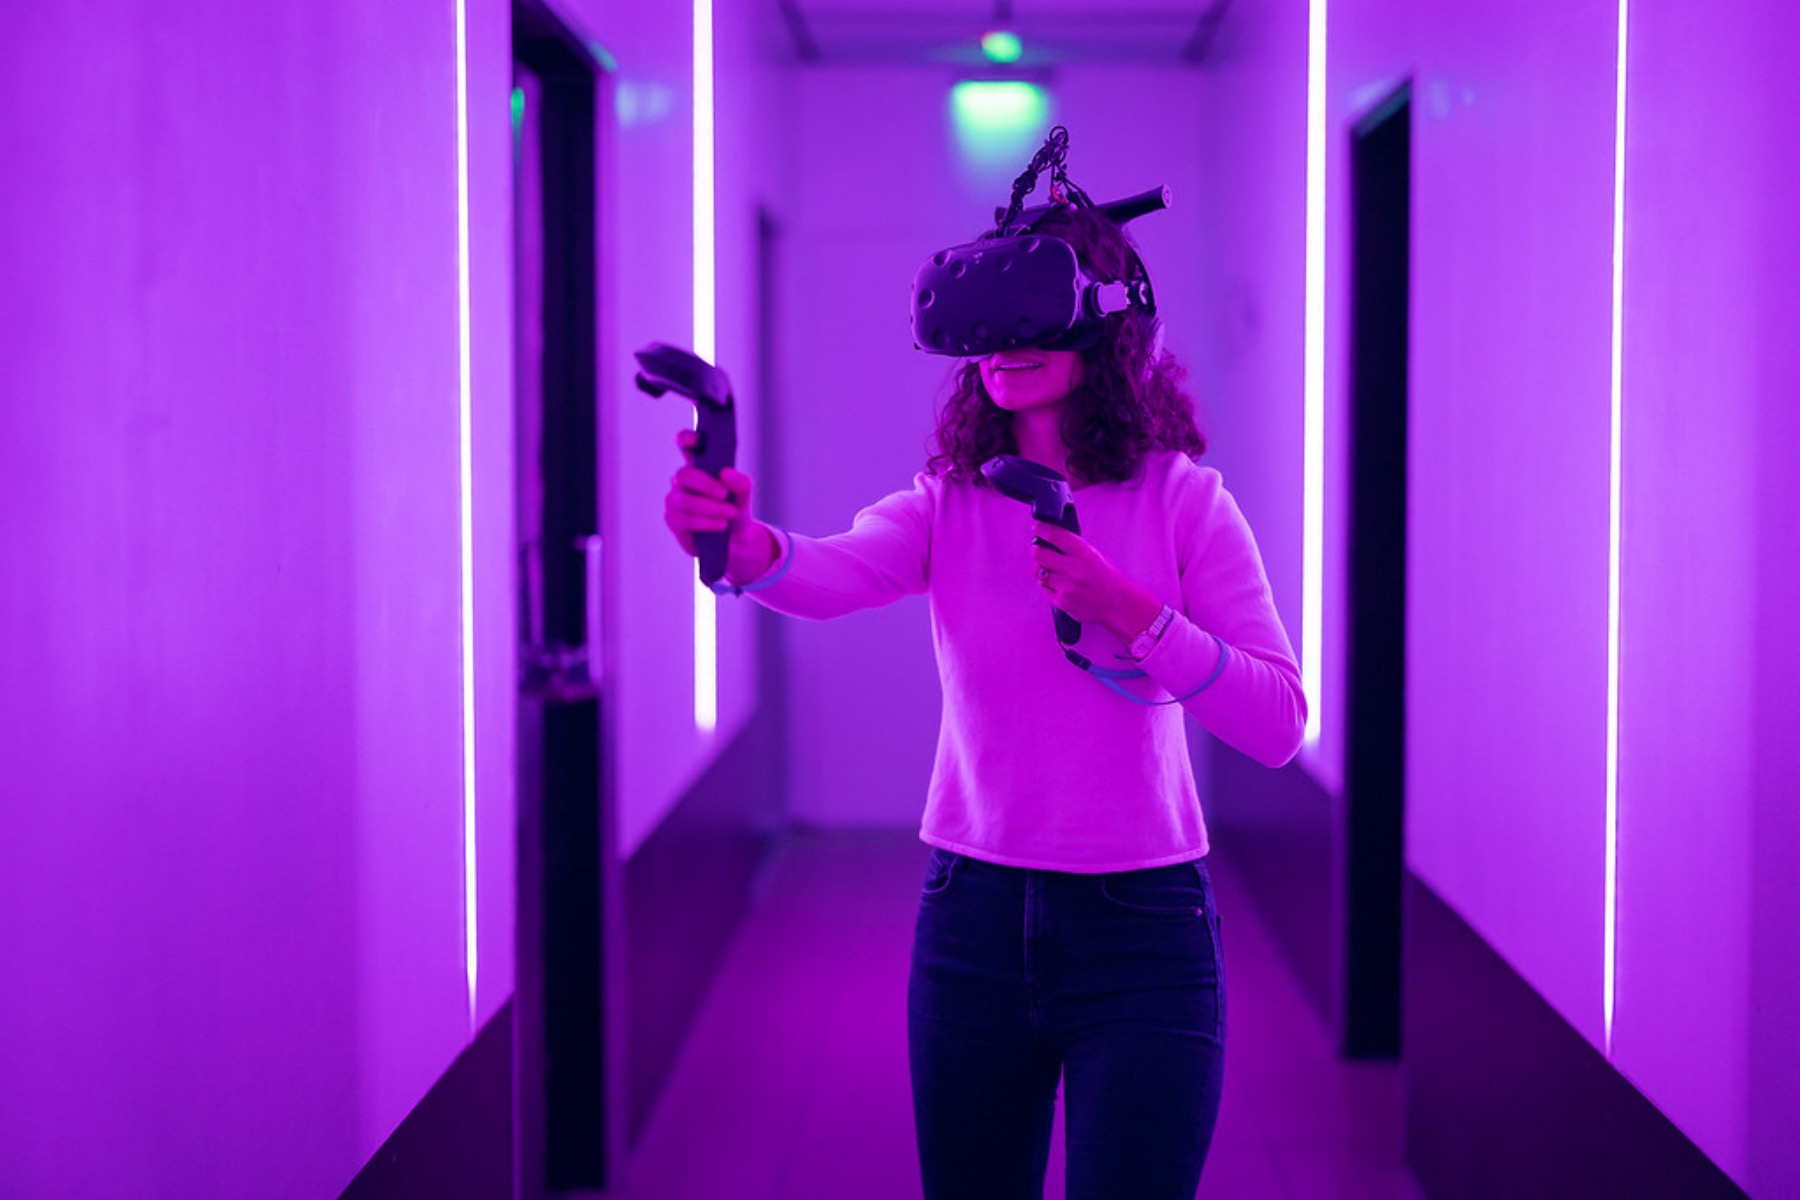 Geheimtipp Augsburg Vaons Virtual Reality Virtualreality1